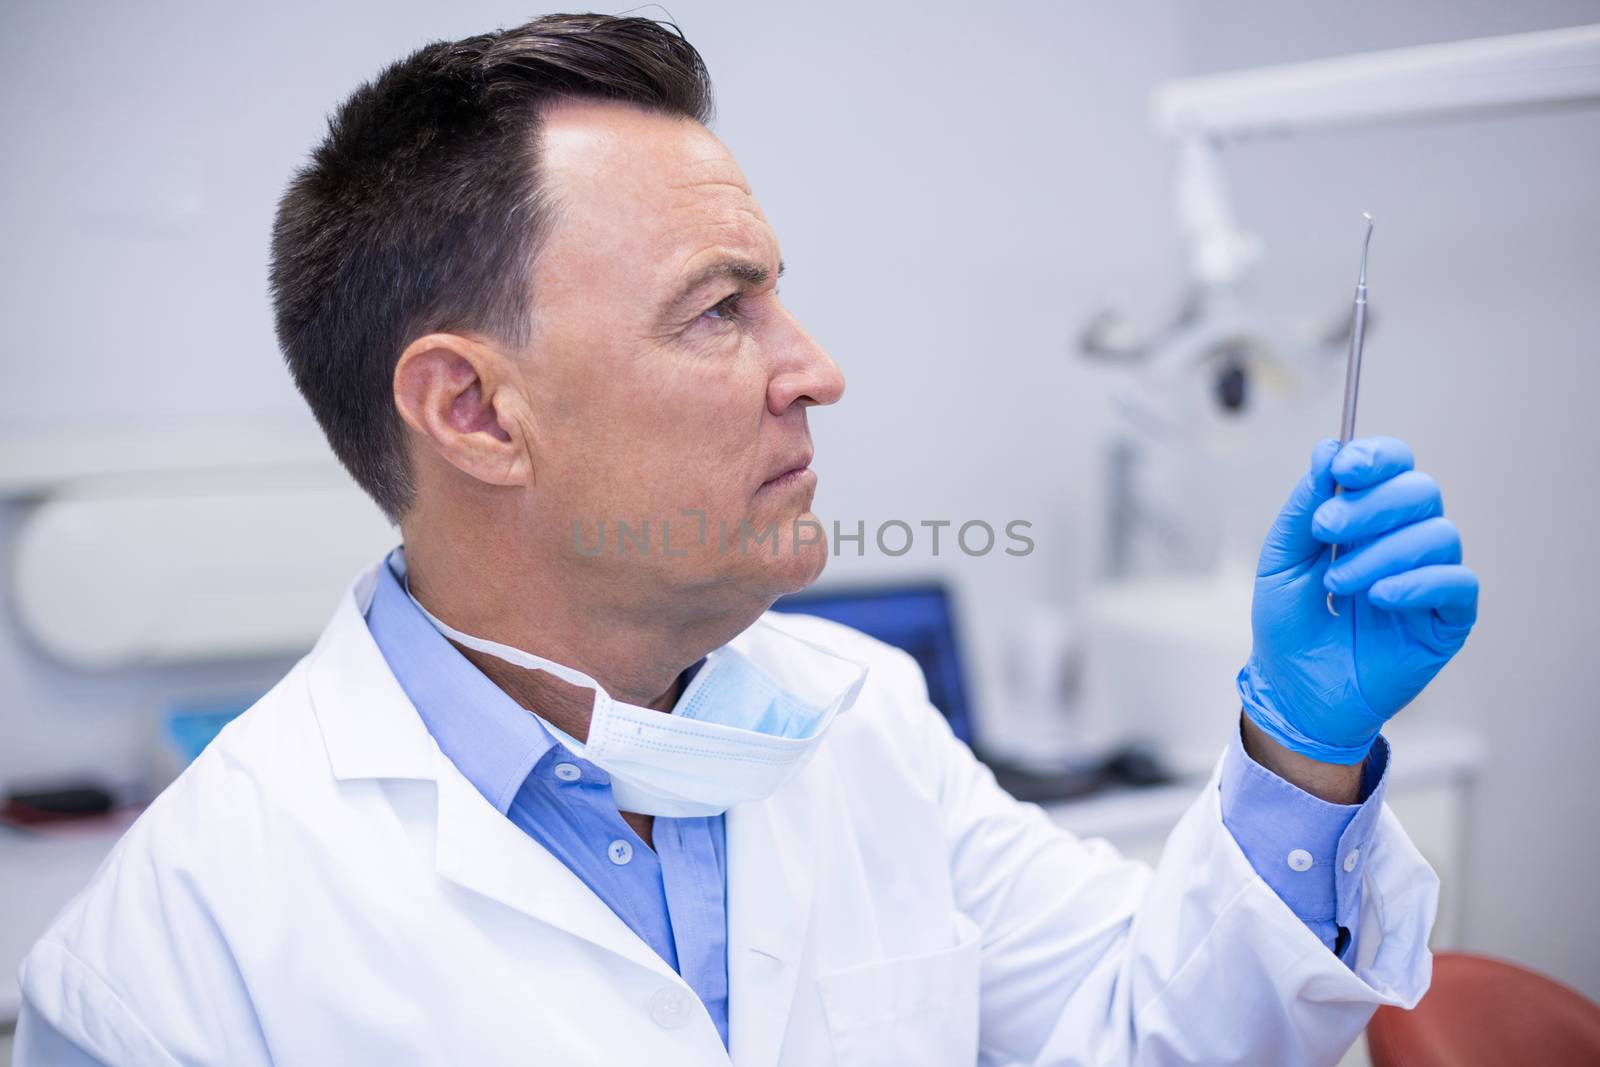 Dentist checking tools in dental clinic by Wavebreakmedia